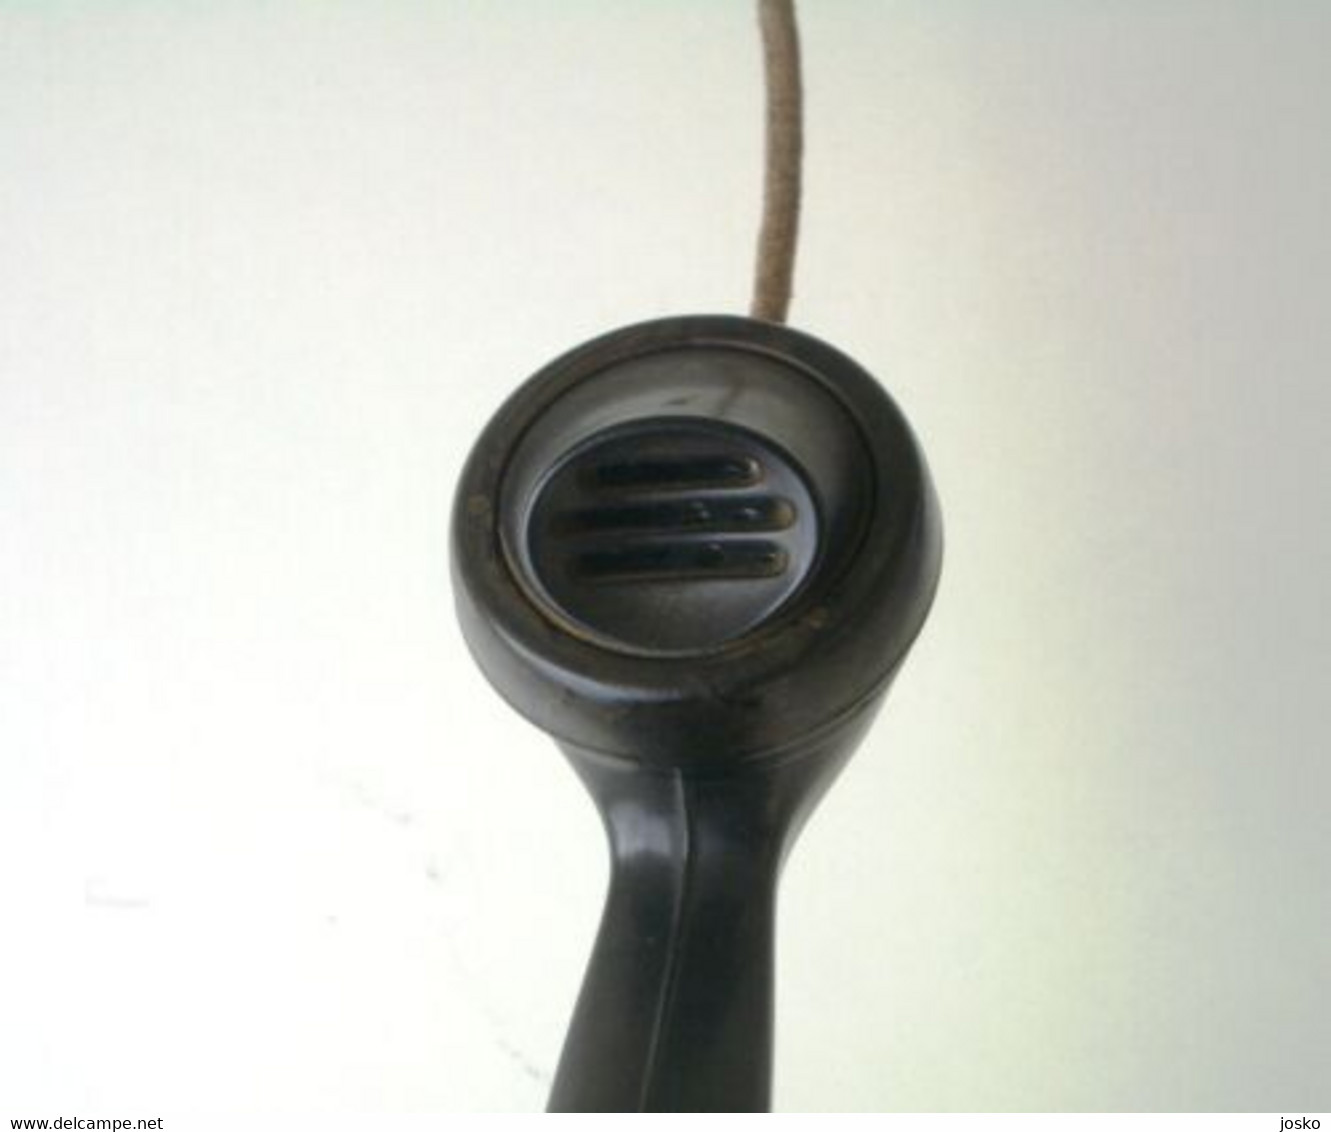 SIEMENS - Germany antique Pre-WW2 magnetic telephone * GENERATOR WORKS * Deutschland telefon